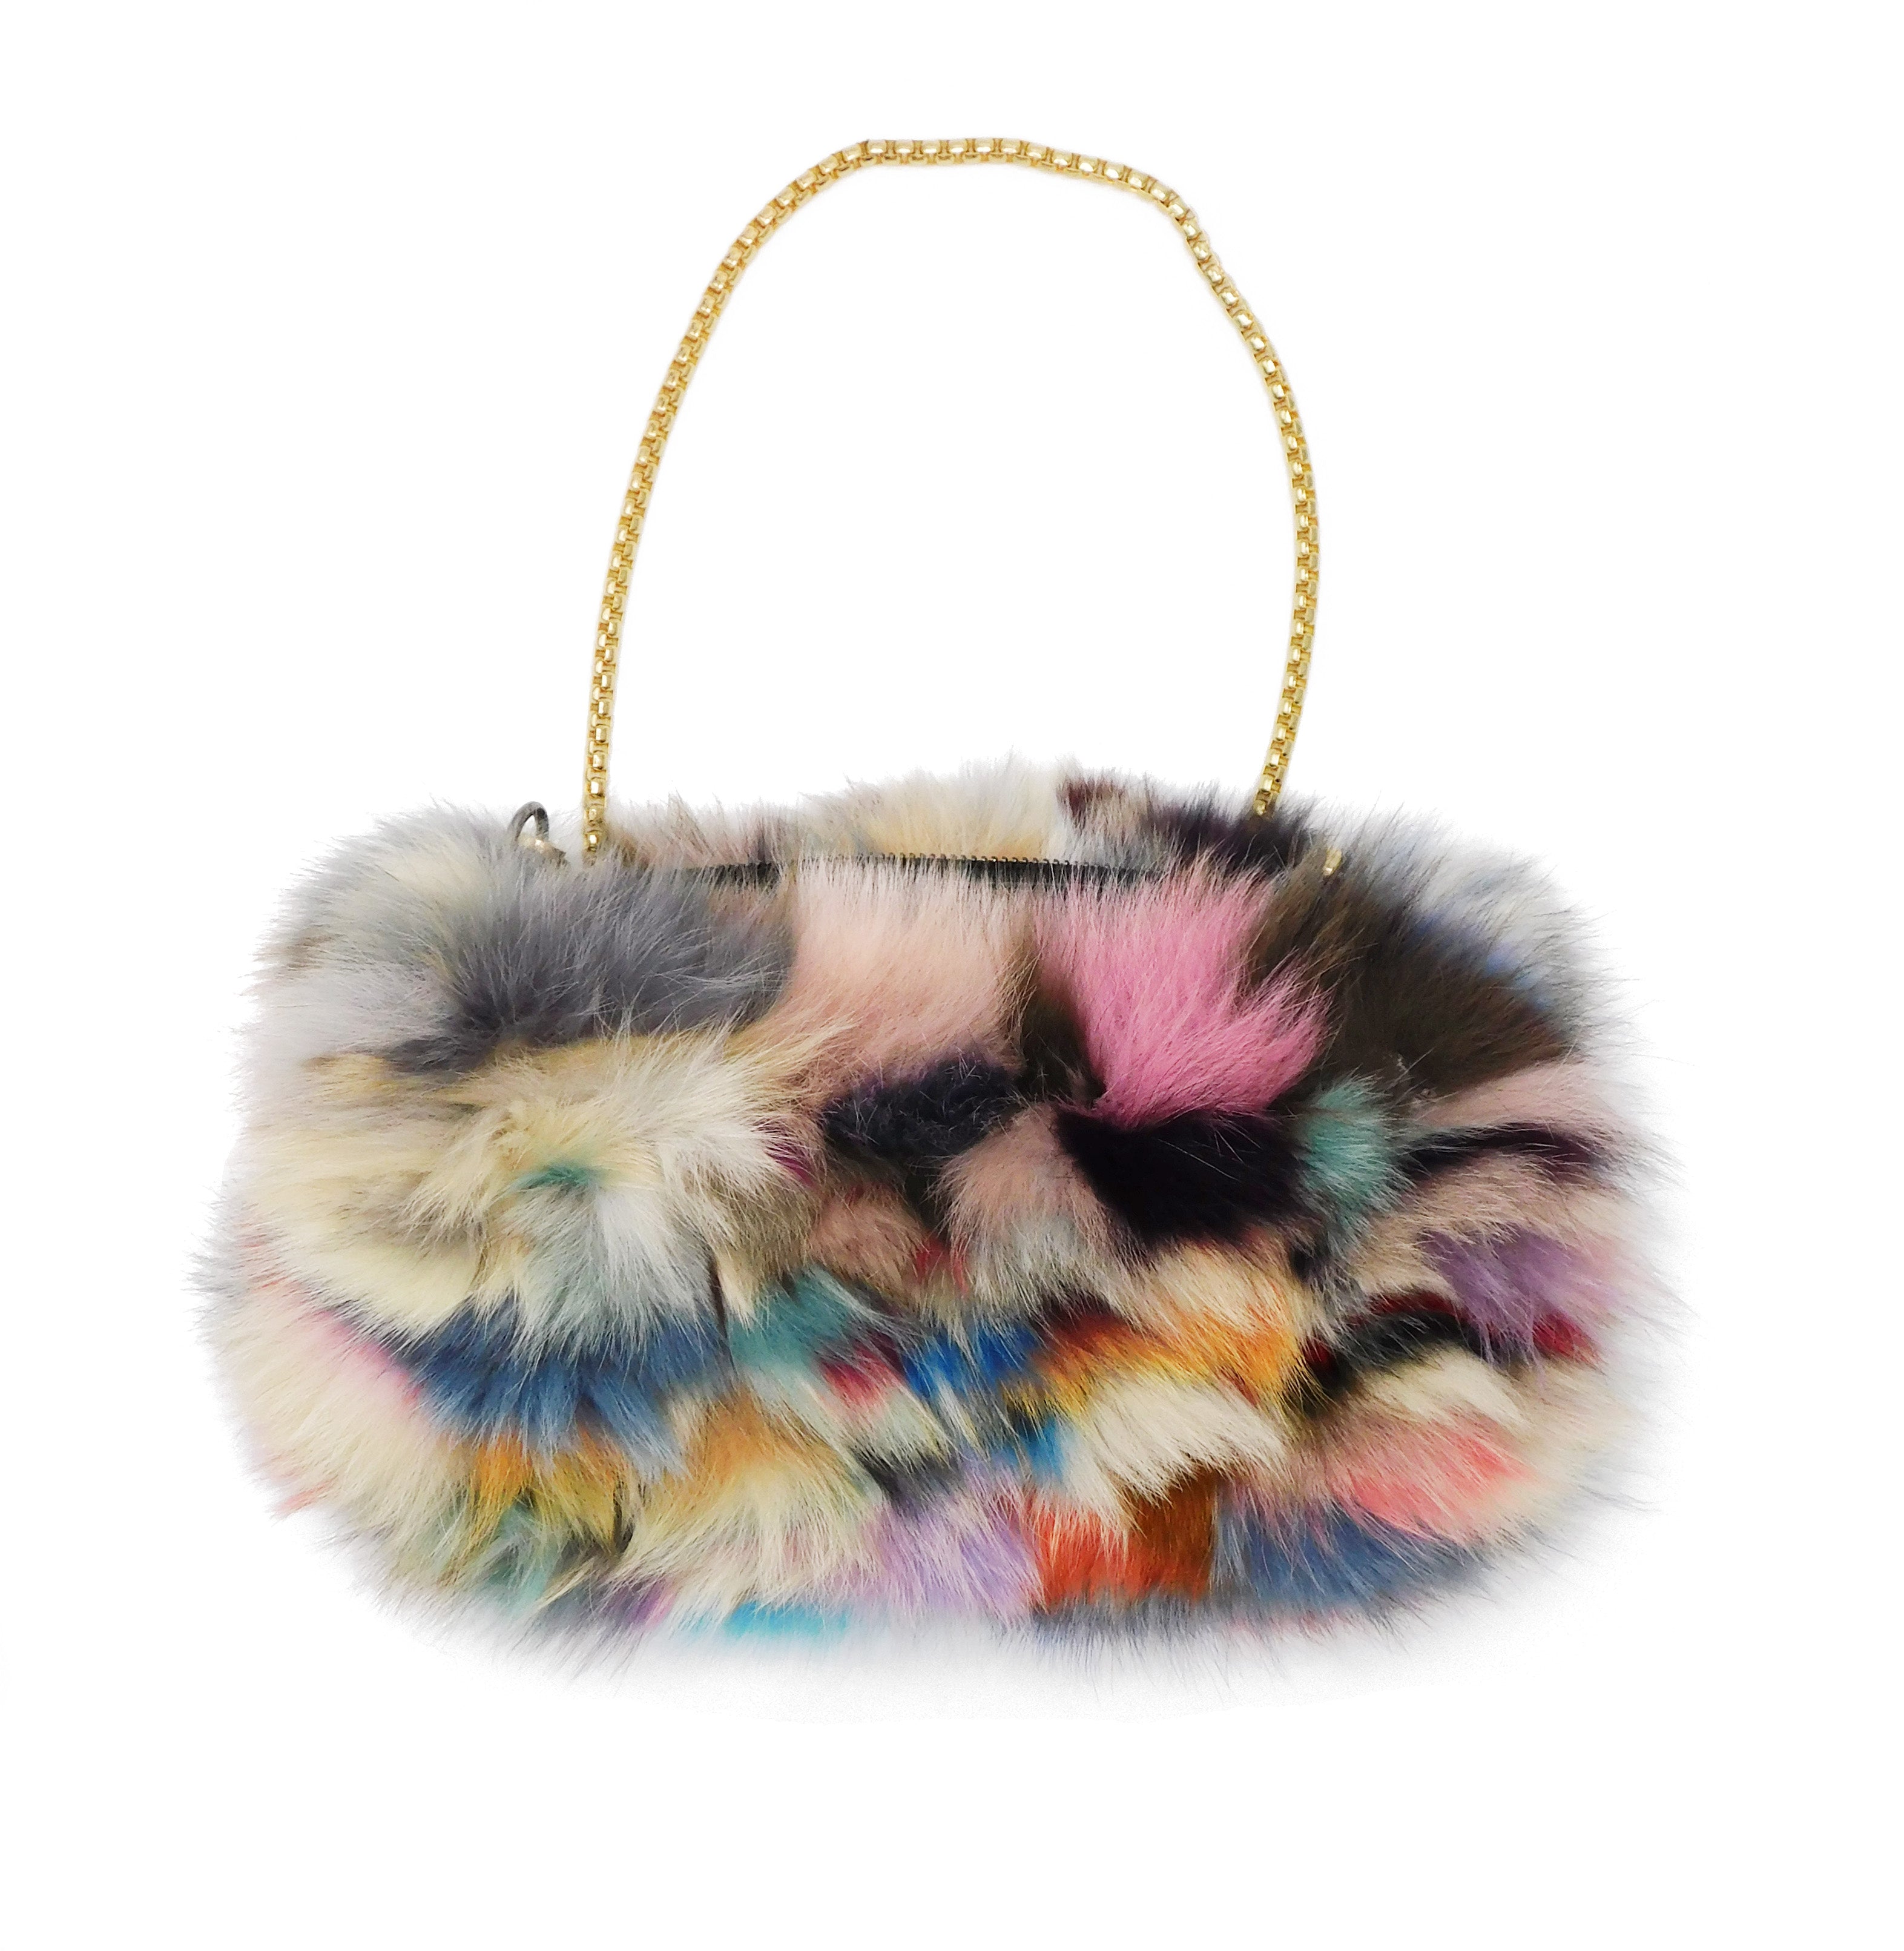 Multicolor Fox Fur Muff Handbag with Gold Chain - paulamariecollection